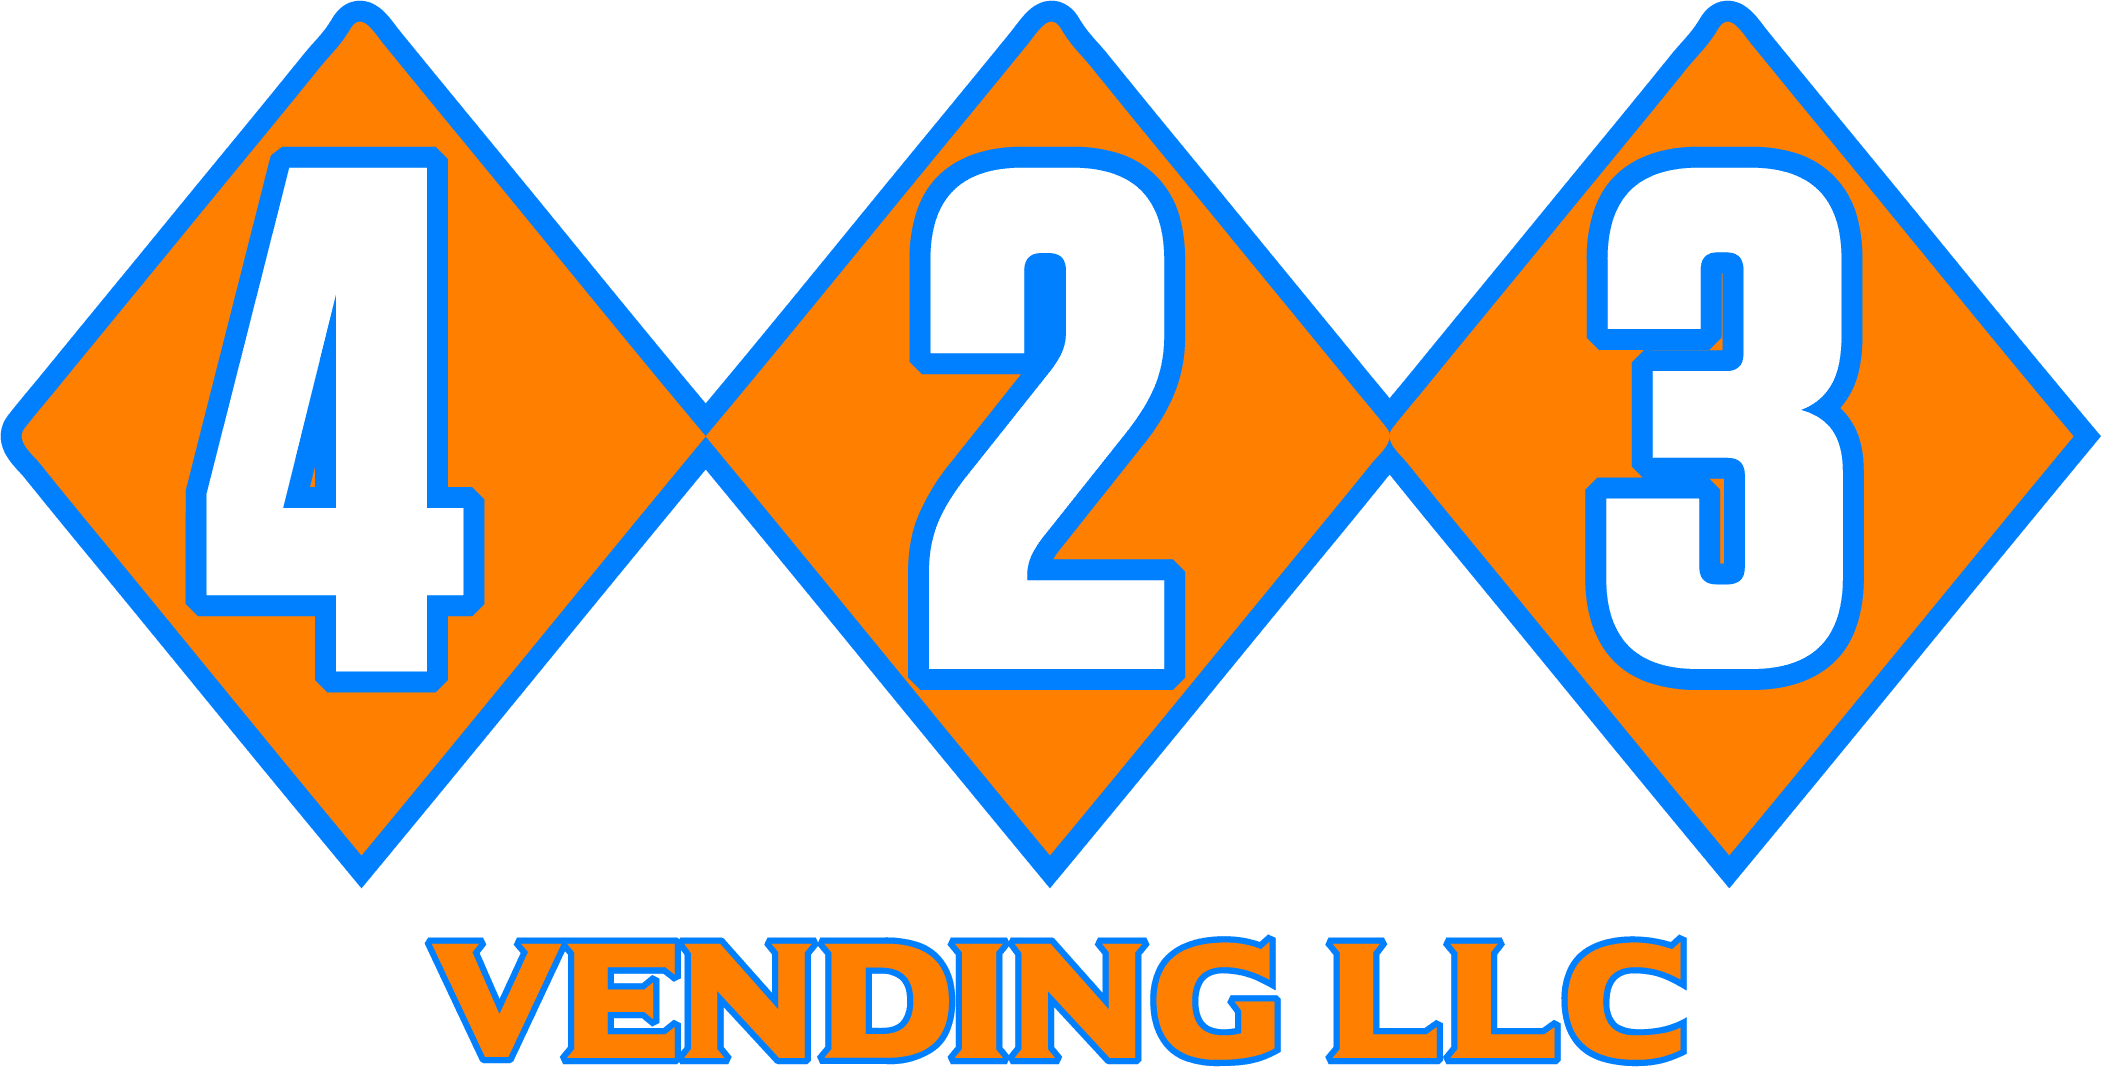 423 Vending LLC